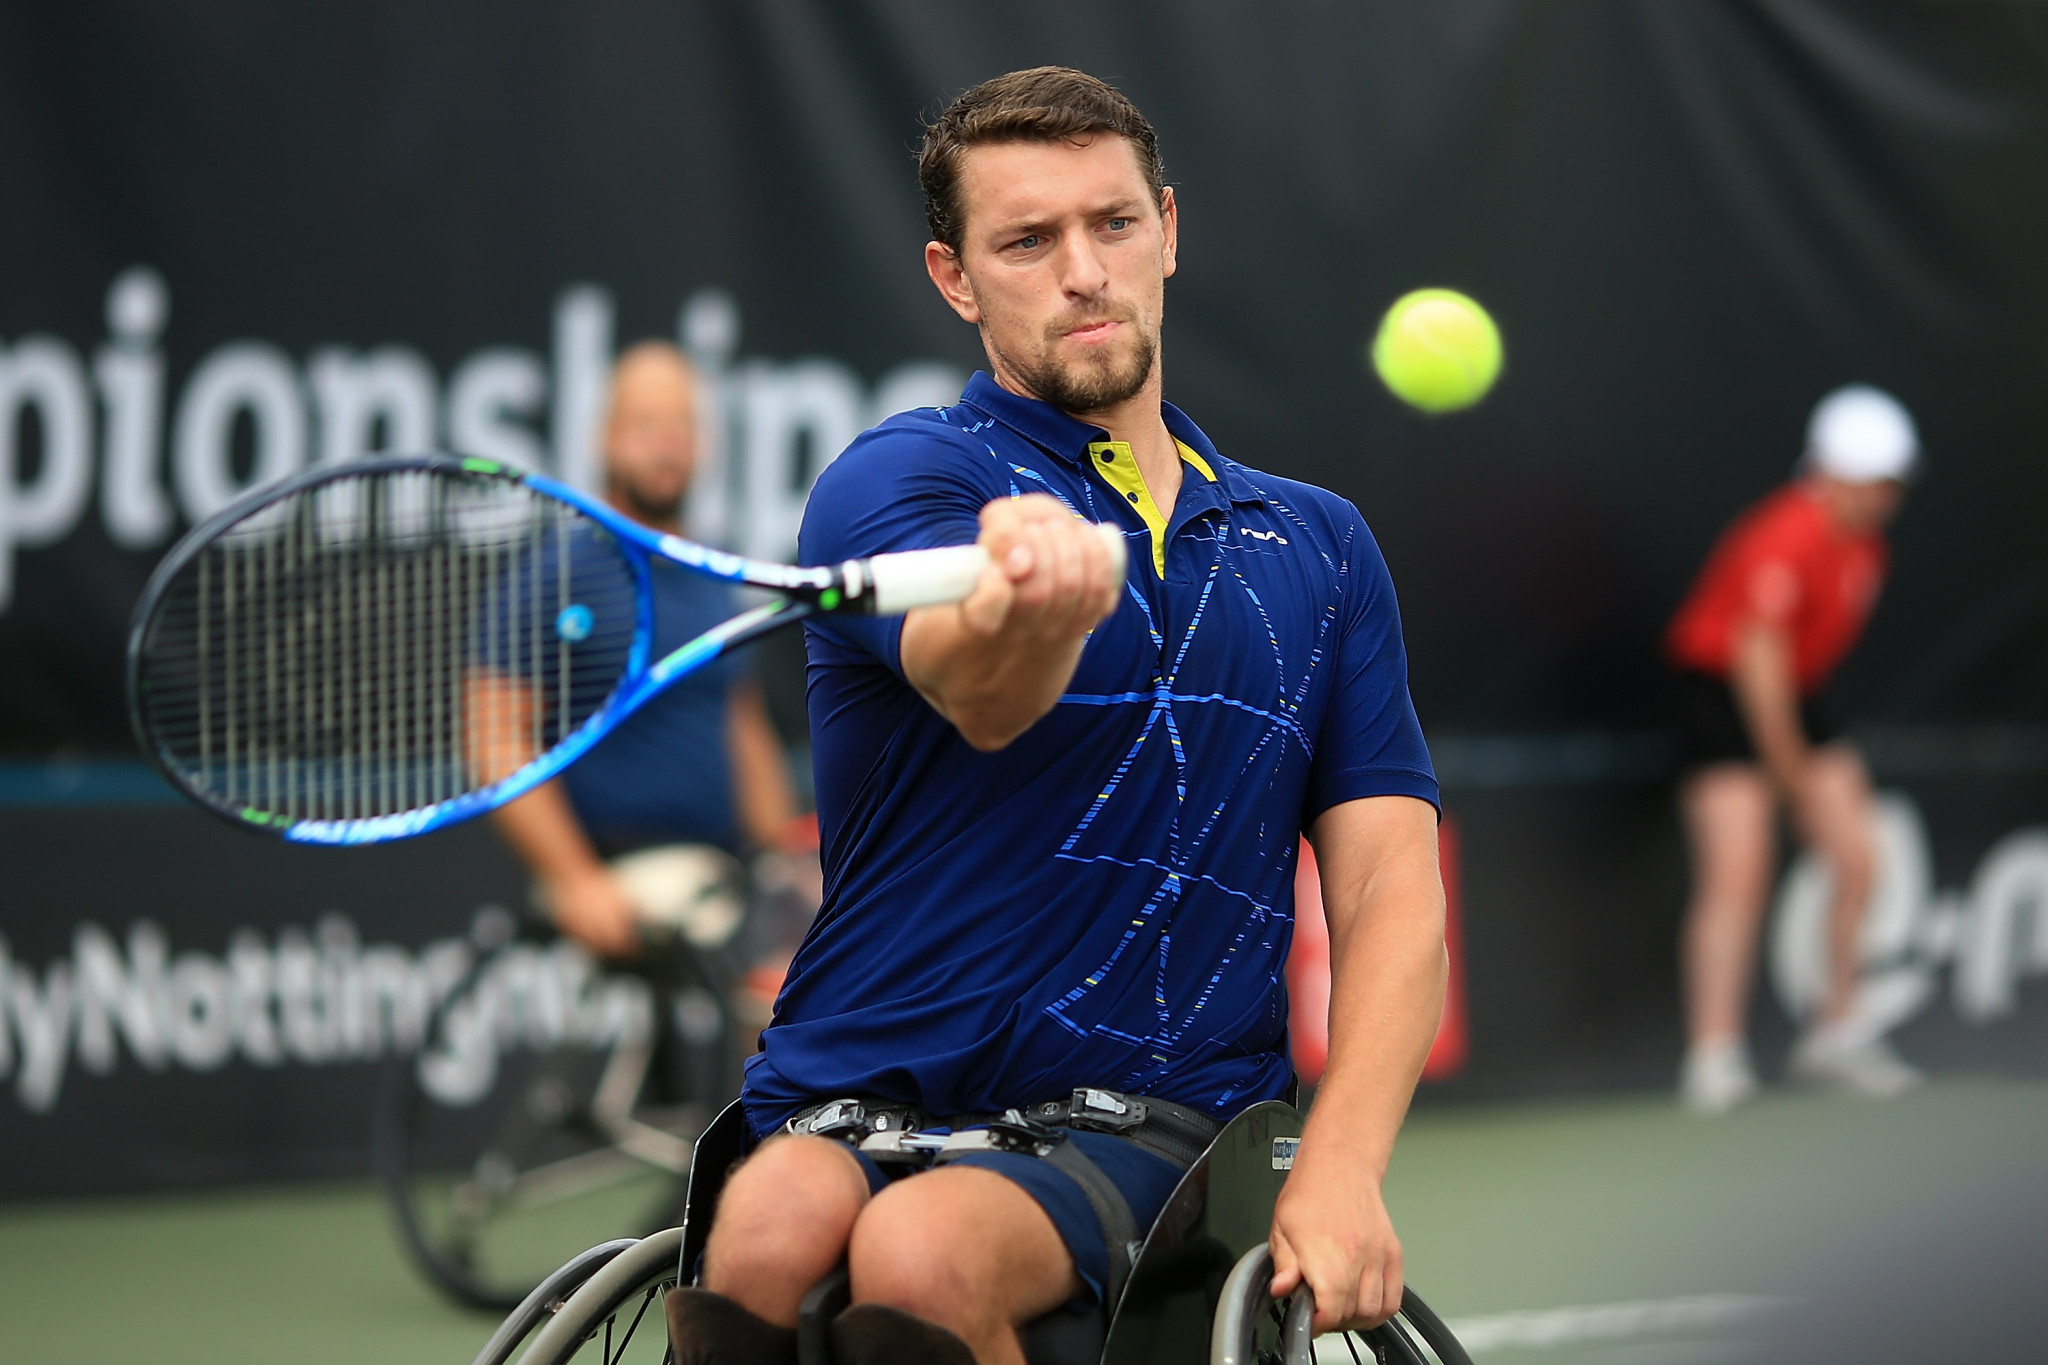 Gerard eyes home success at Belgian Open Wheelchair Tennis tournament